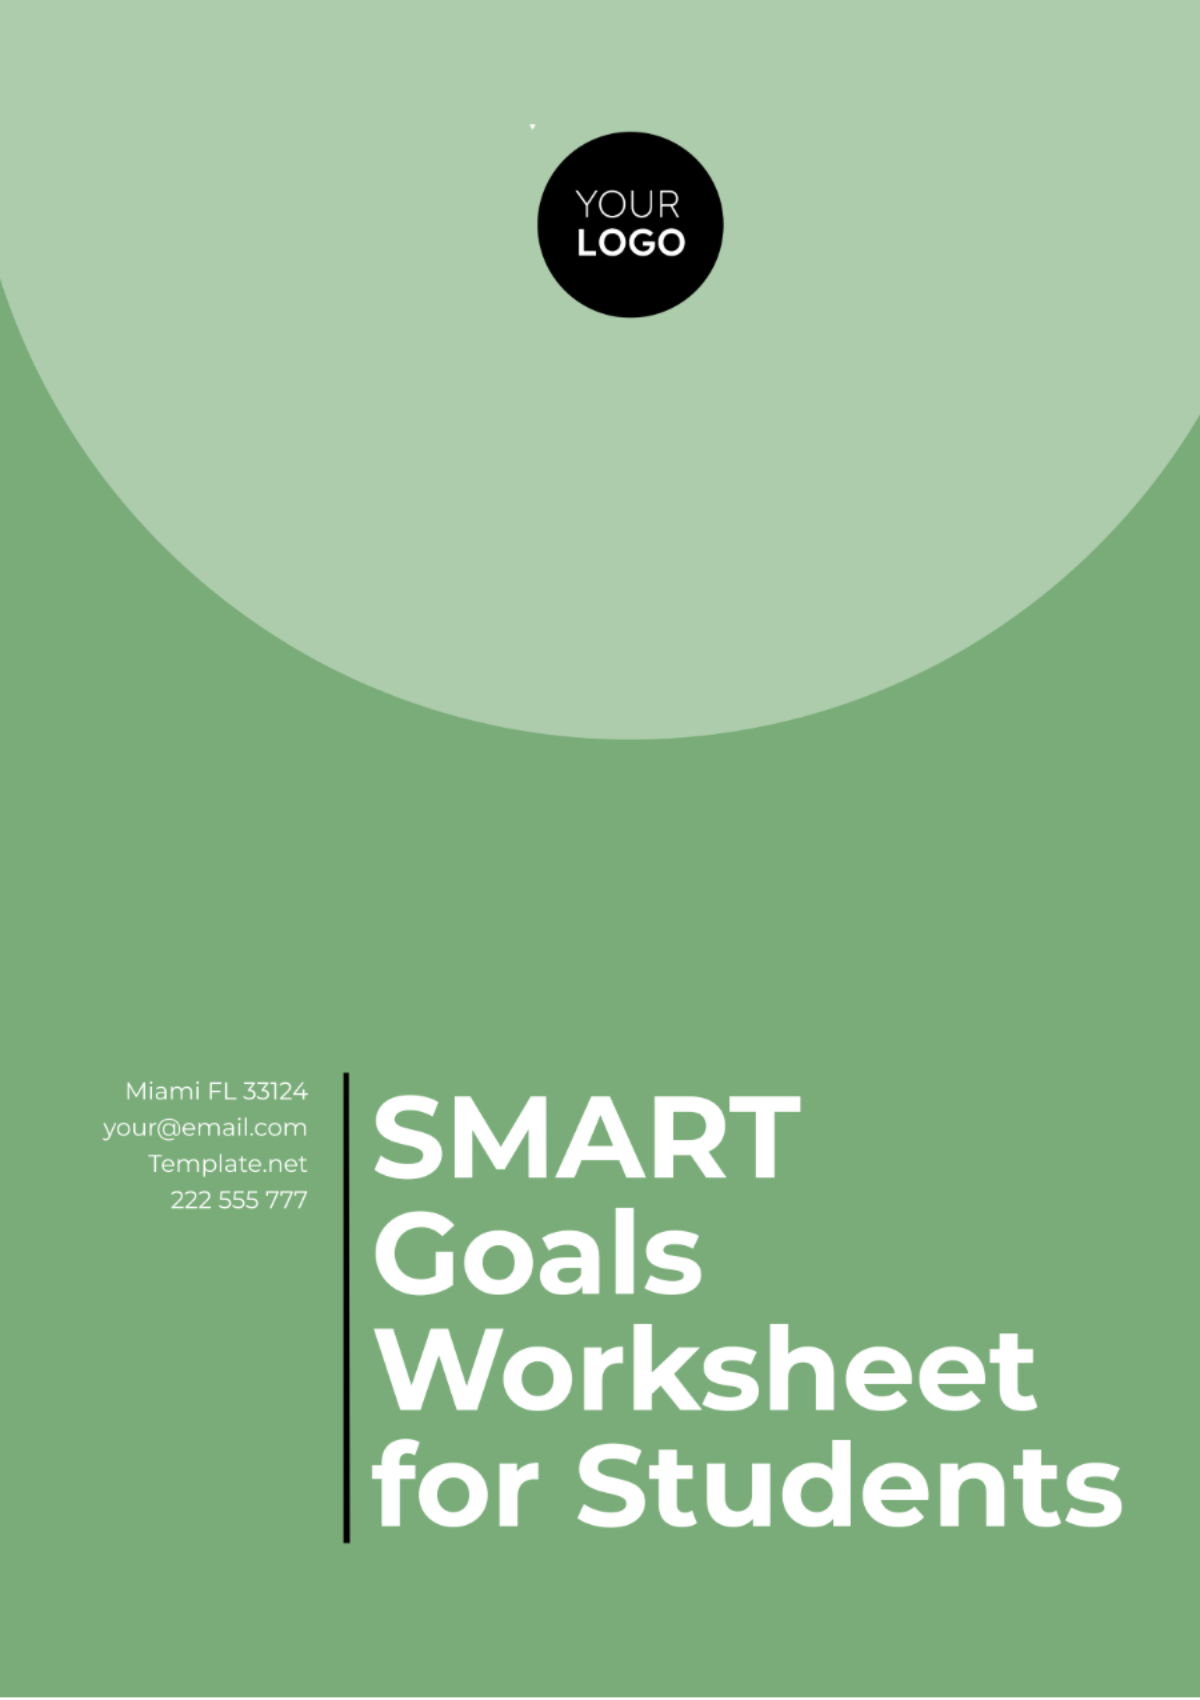 SMART Goals Worksheet for Students Template